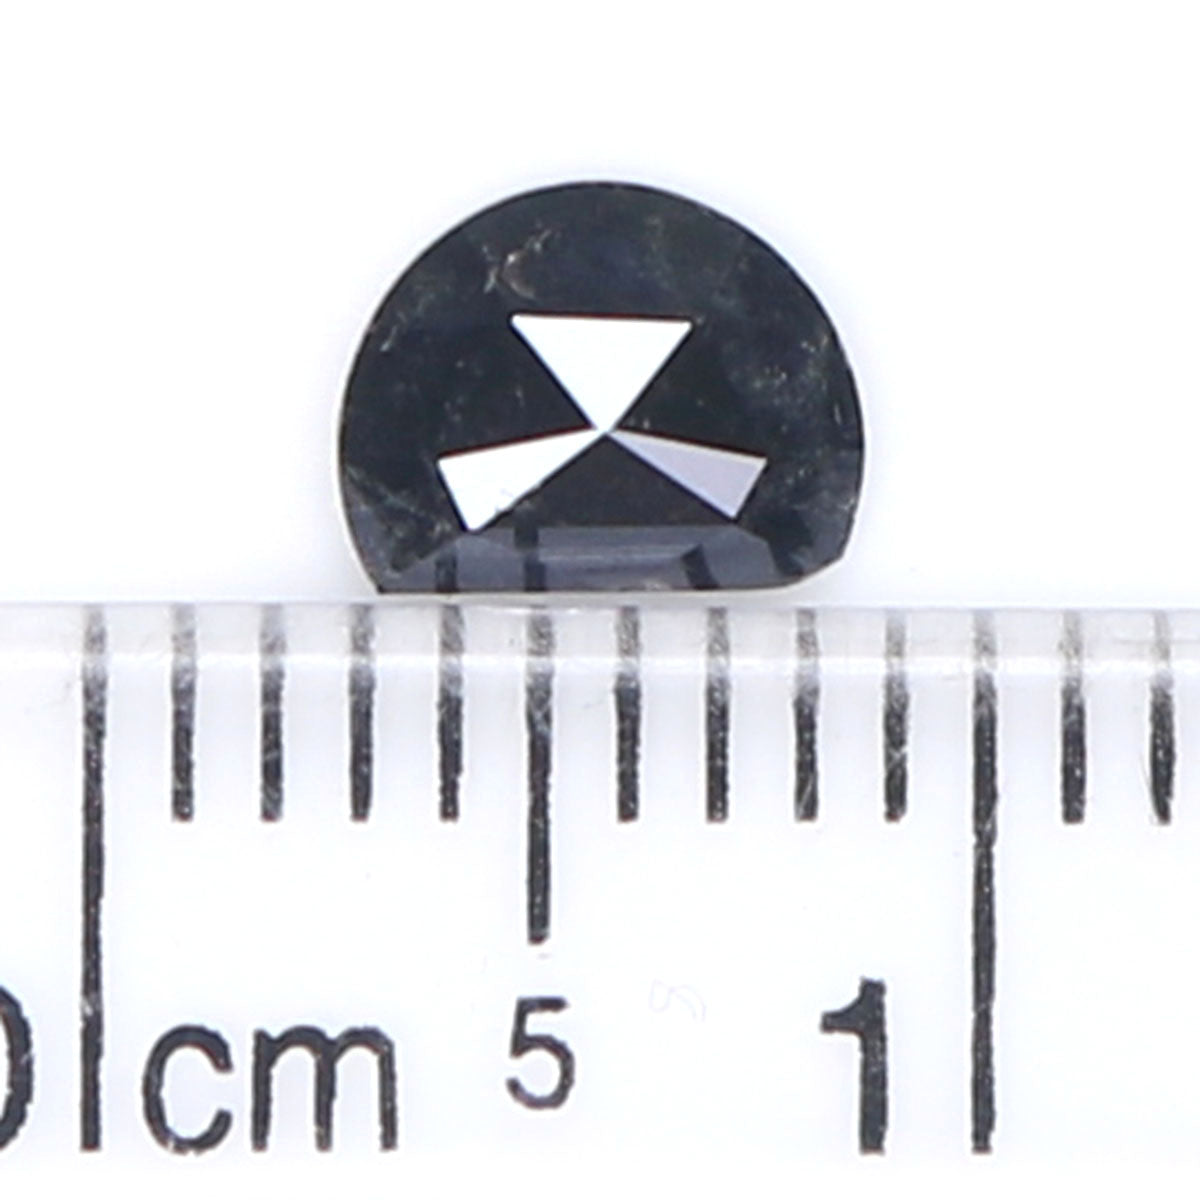 Natural Loose Half Moon Shape Black Color Diamond 0.46 CT 5.95 MM Half Moon Shape Rose Cut Diamond L8892